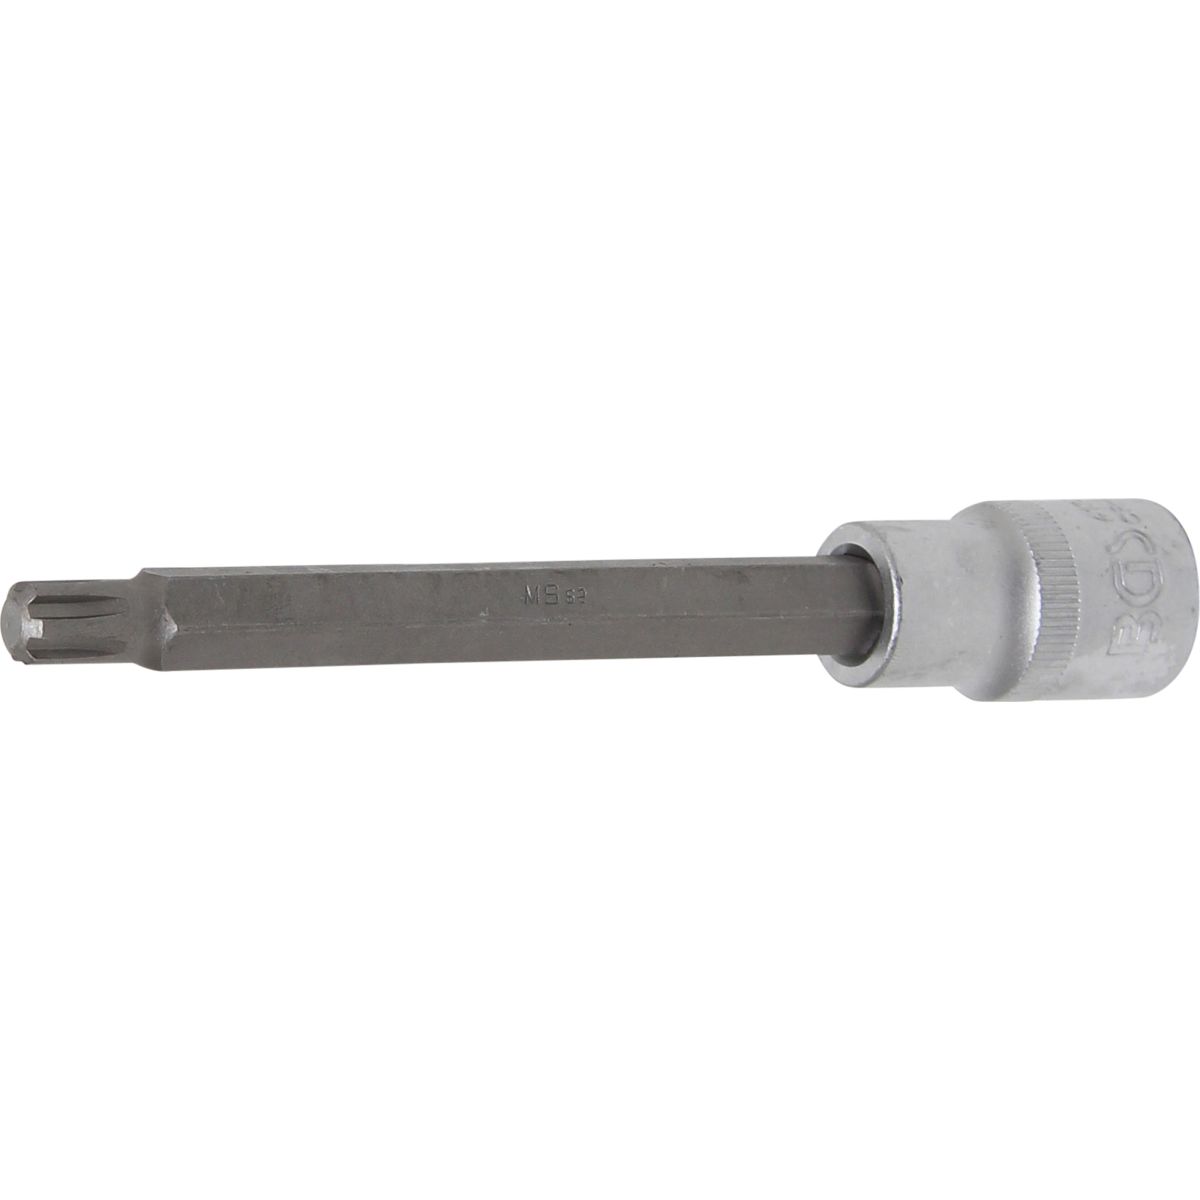 Bit-Einsatz | Länge 140 mm | Antrieb Innenvierkant 12,5 mm (1/2") | Keil-Profil (für RIBE) M9